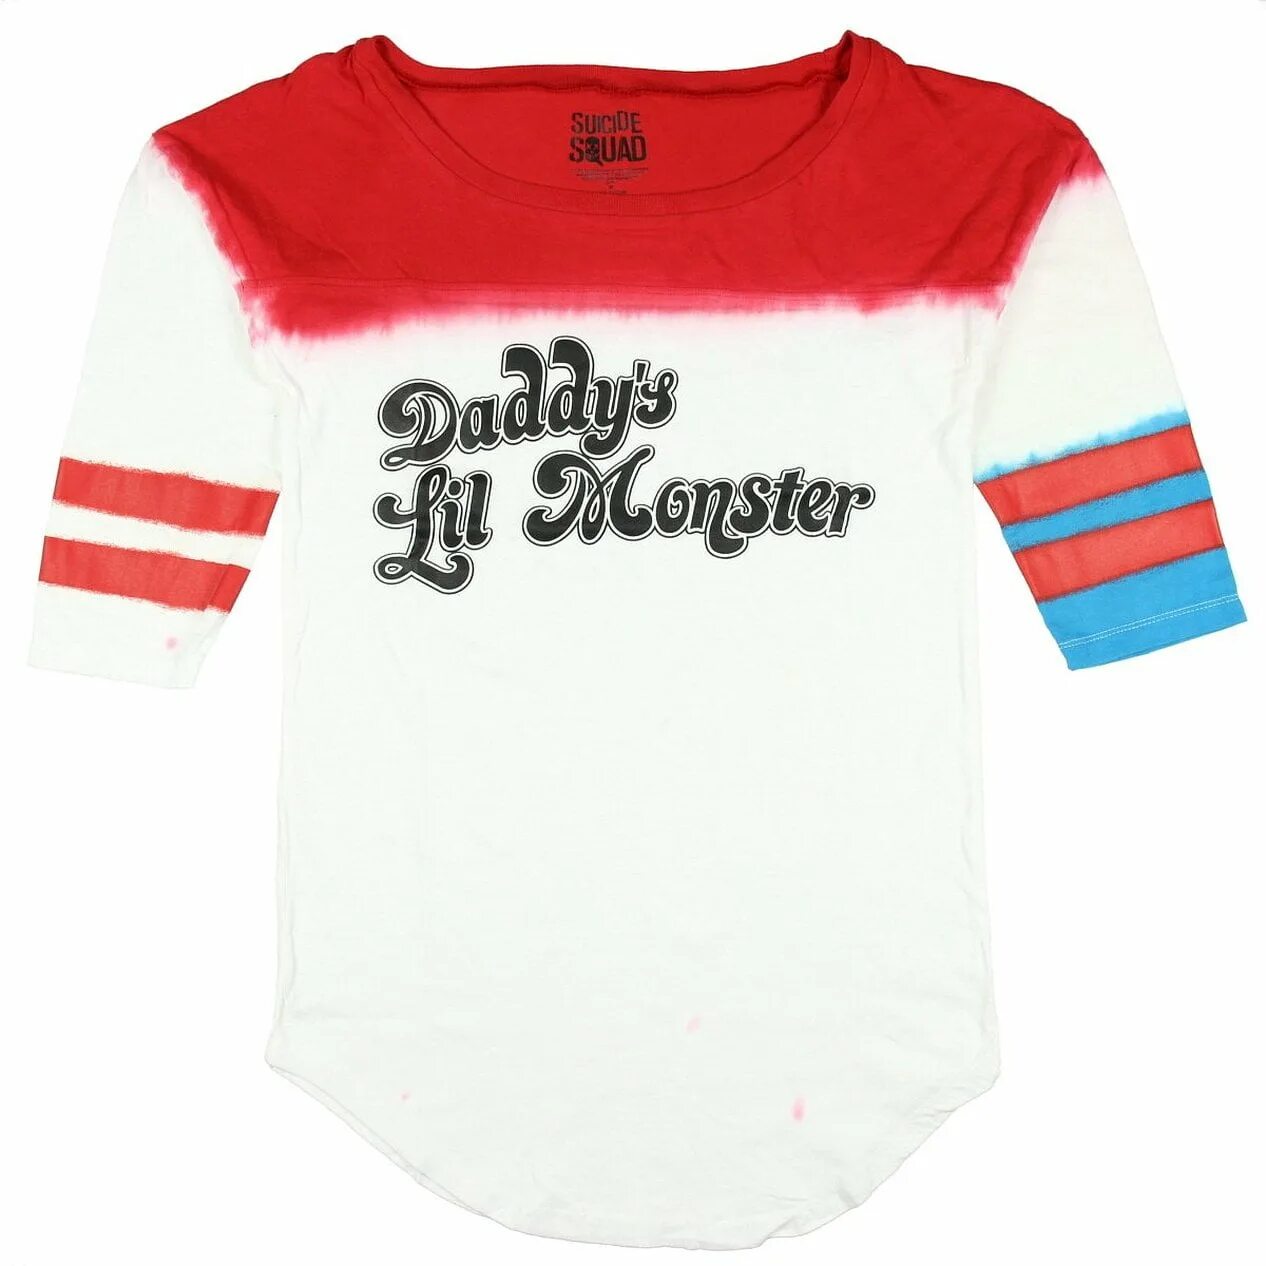 Daddy's lil. Футболка Харли Квинн Daddy Lil Monster. Daddy's Lil Monster футболка. Daddy's little Monster футболка. Надпись на футболке Харди Квин.